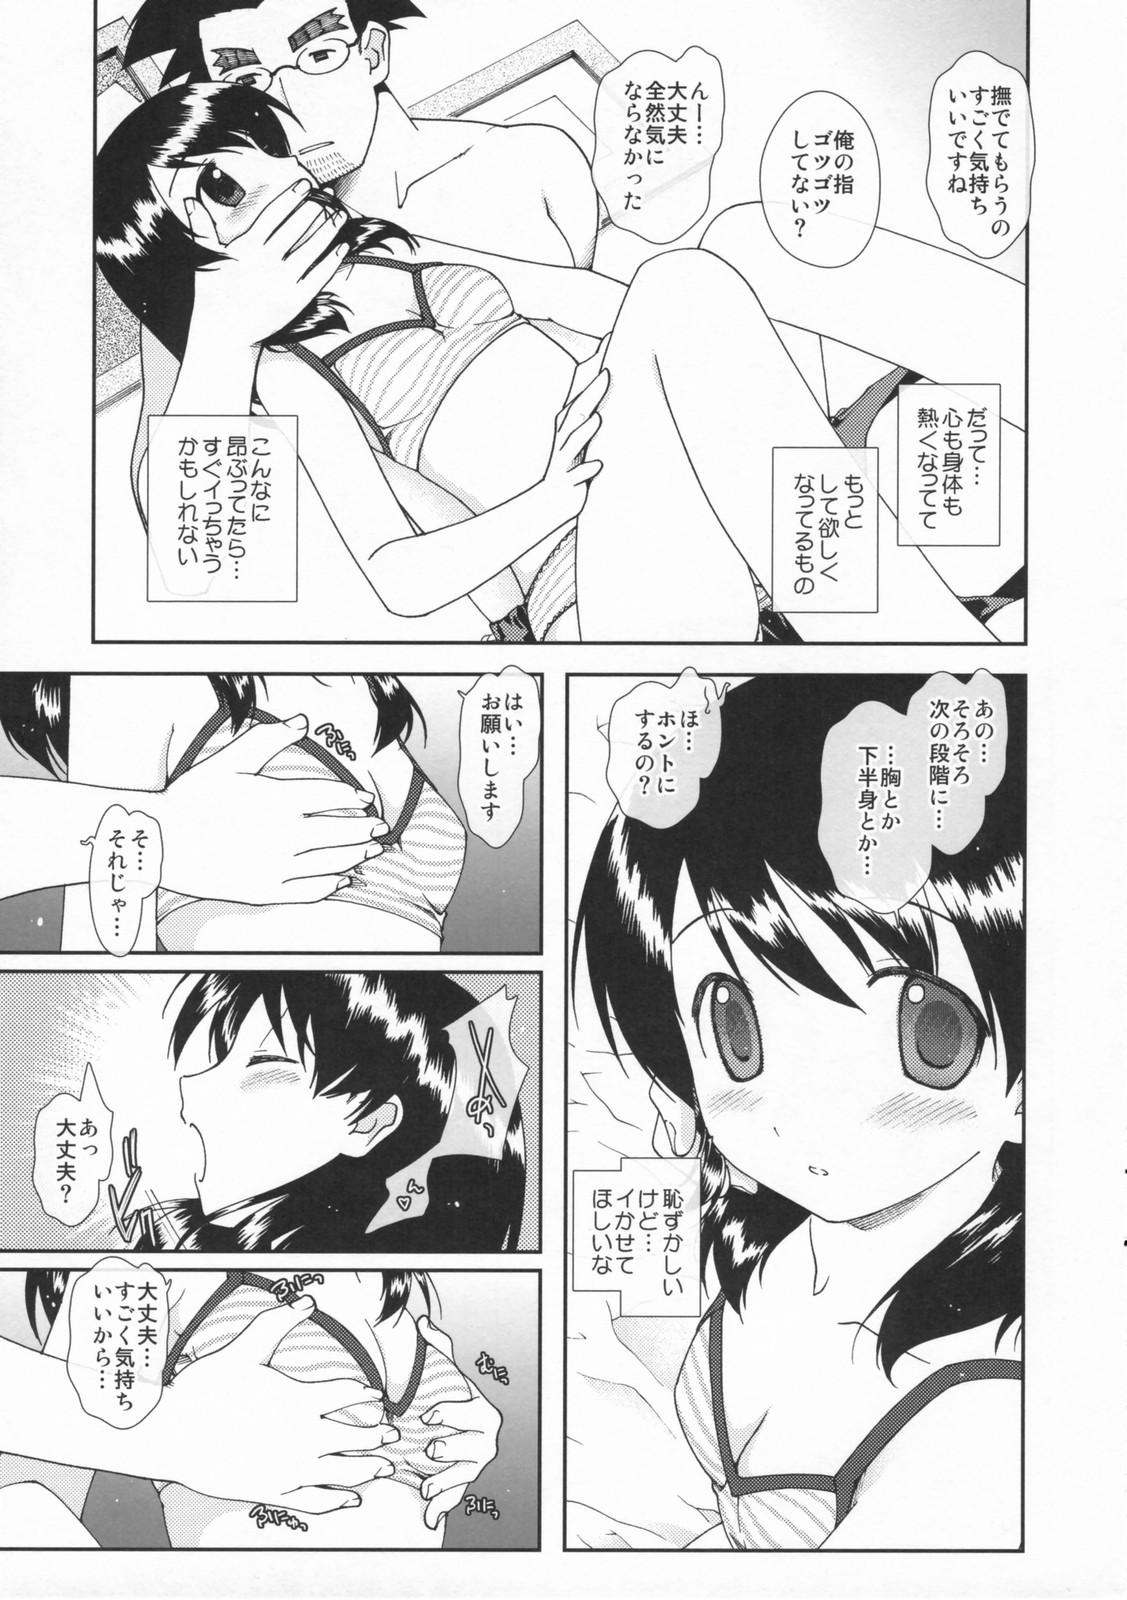 Japan Miurato - Yotsubato Big Tits - Page 5